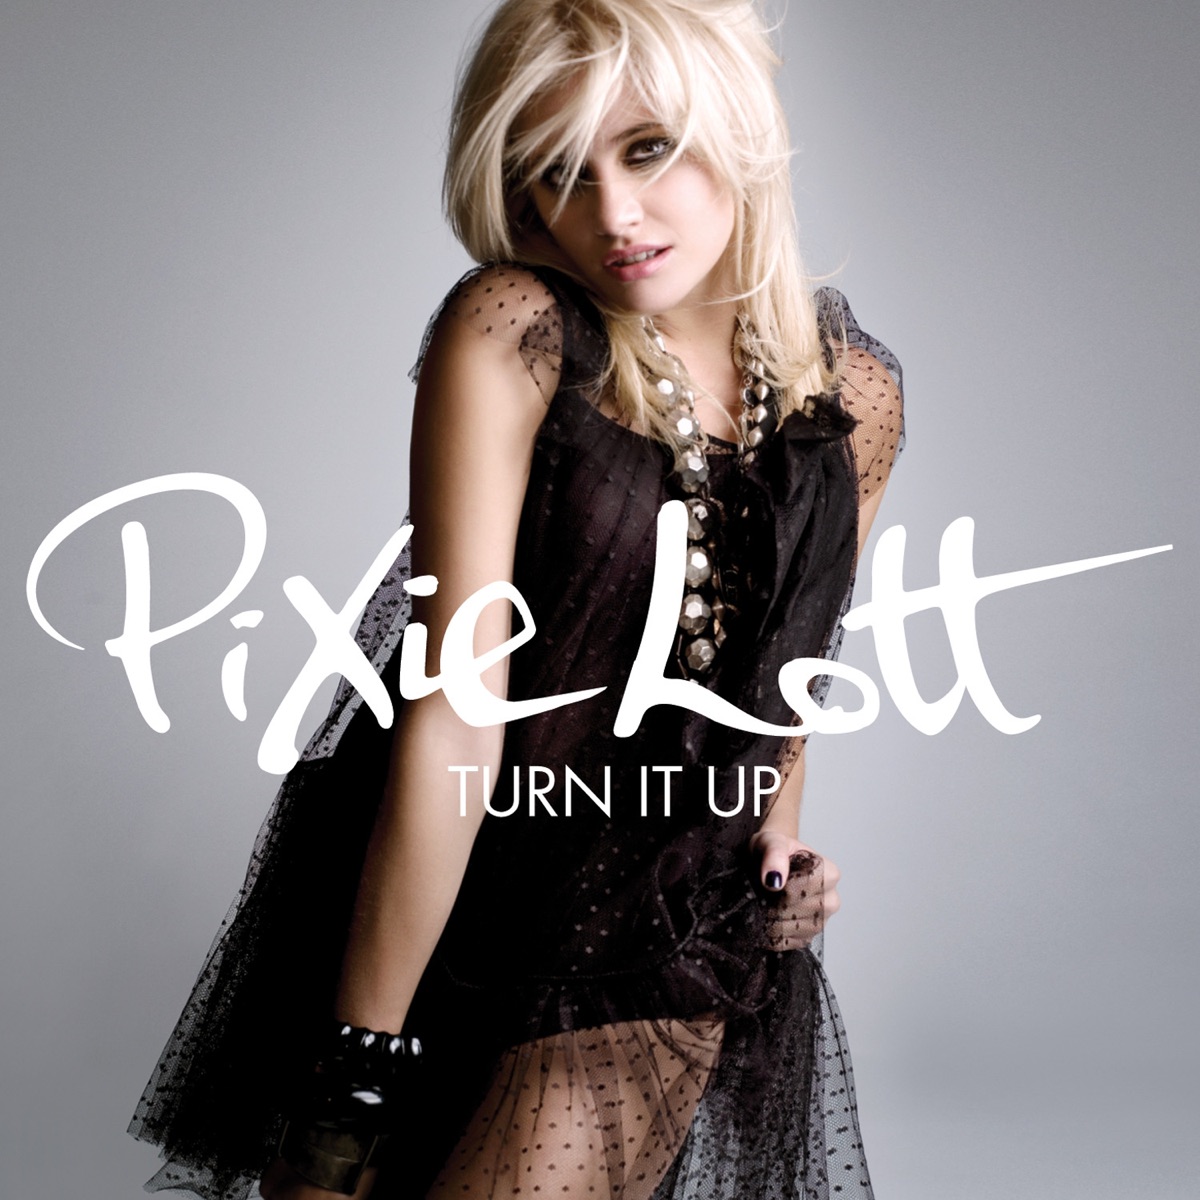 Pixie Lott Turn It Up cover artwork